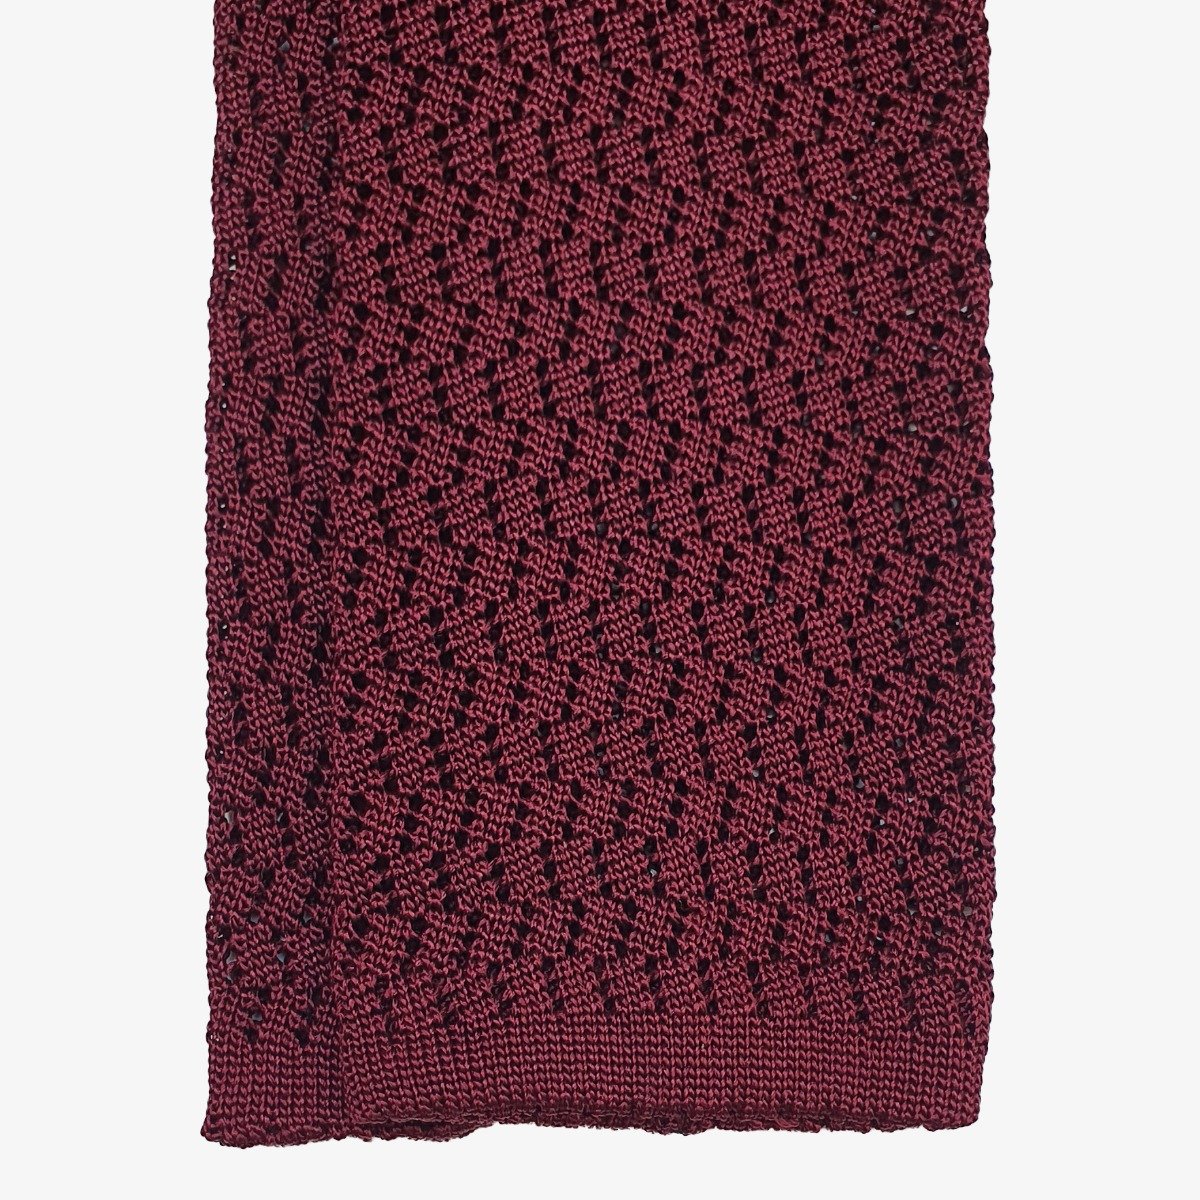 Shibumi Firenze burgundy zigzag knitted silk tie